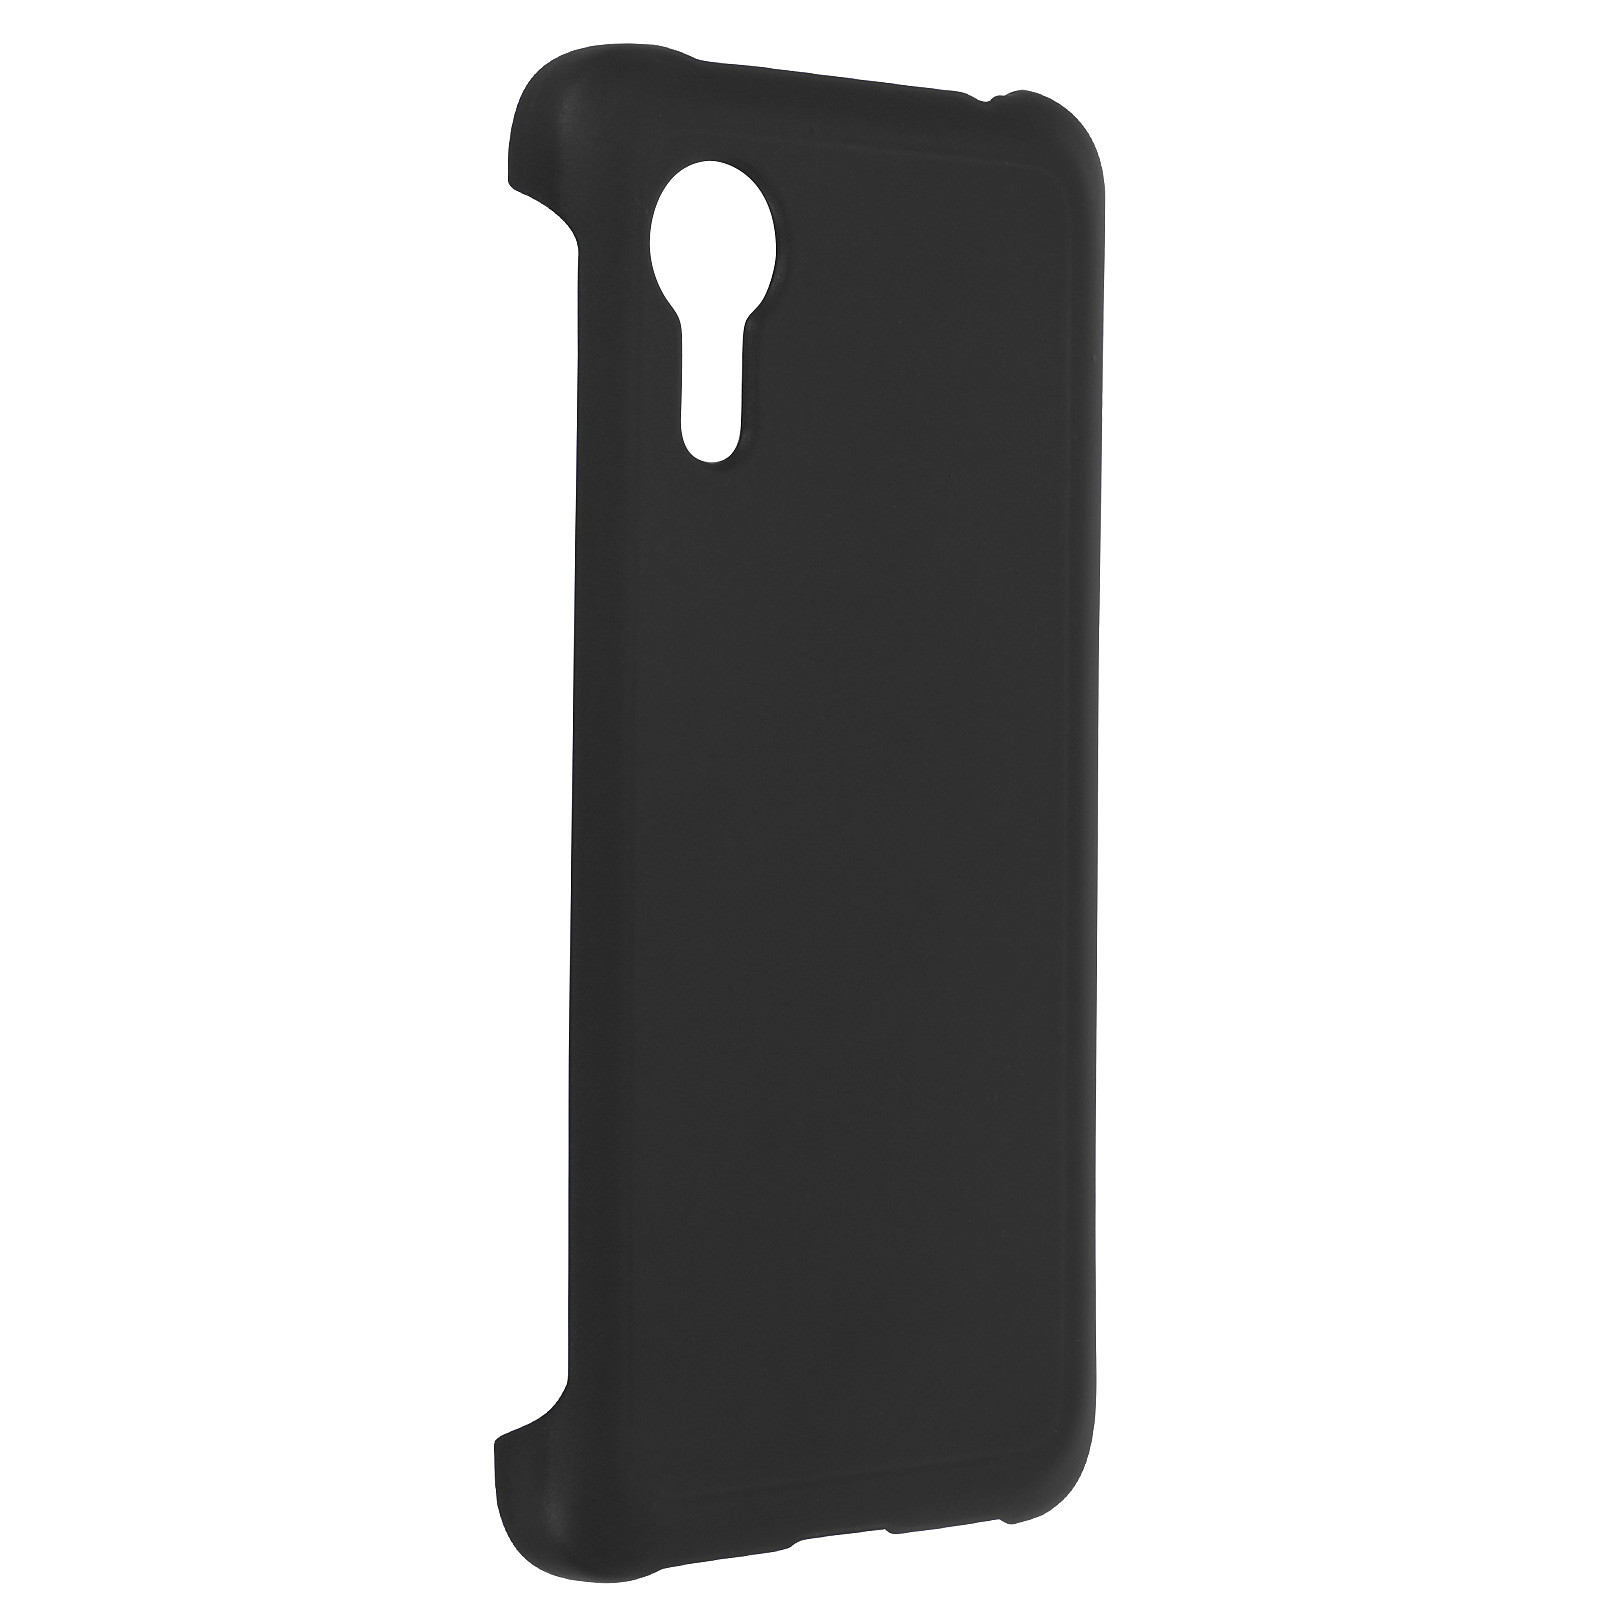 Avizar Coque pour Samsung Galaxy Xcover 5 Bumper Polycarbonate rigide Toucher gomme Anti-traces Noir - Coque telephone Avizar